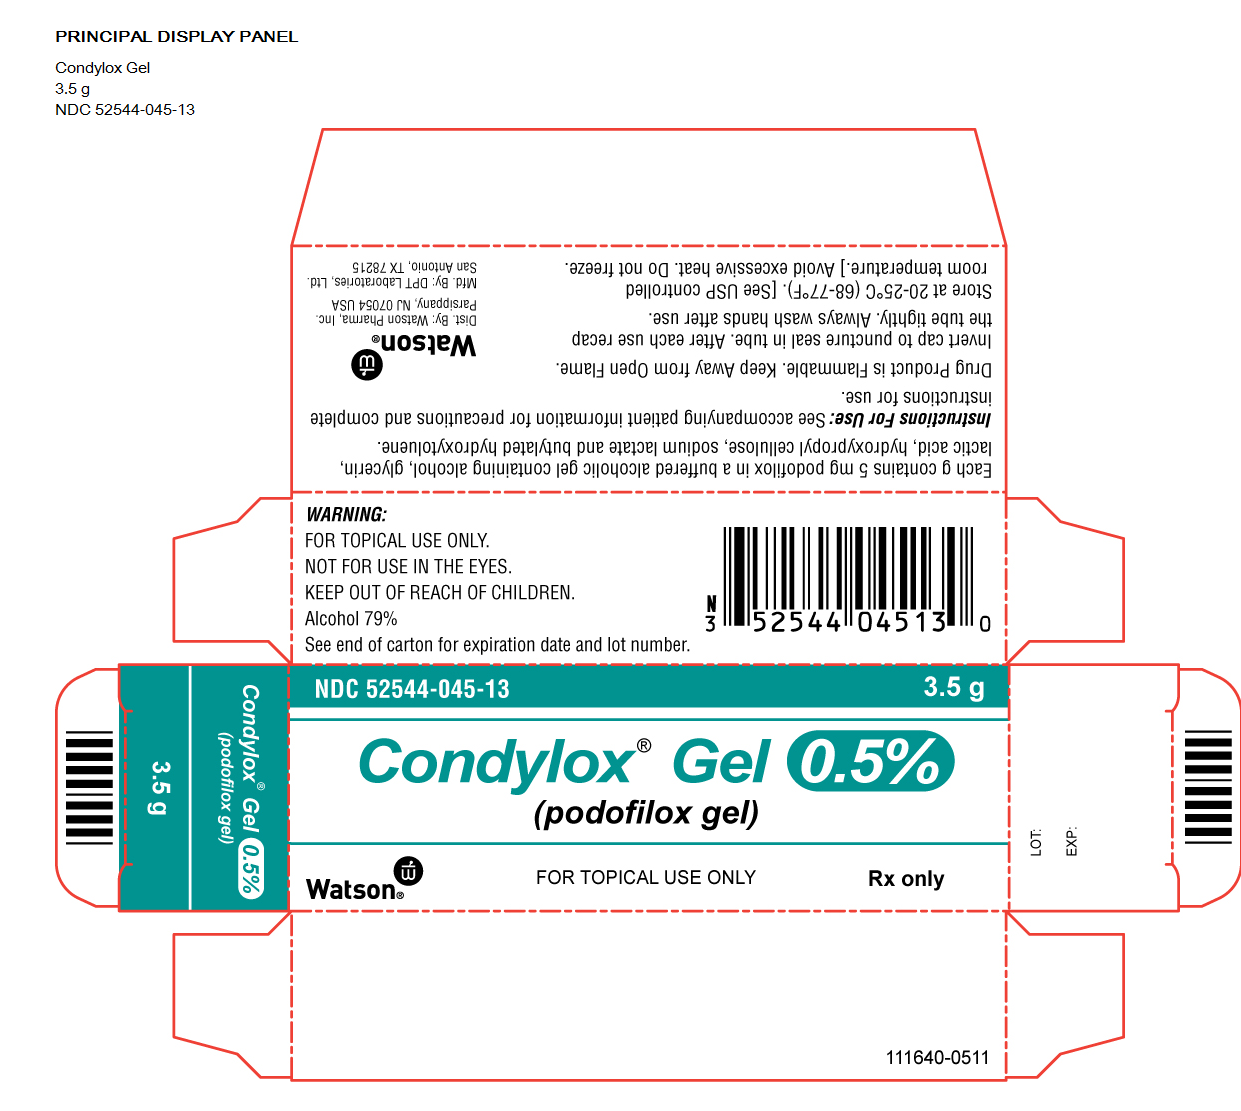 condylox solution price